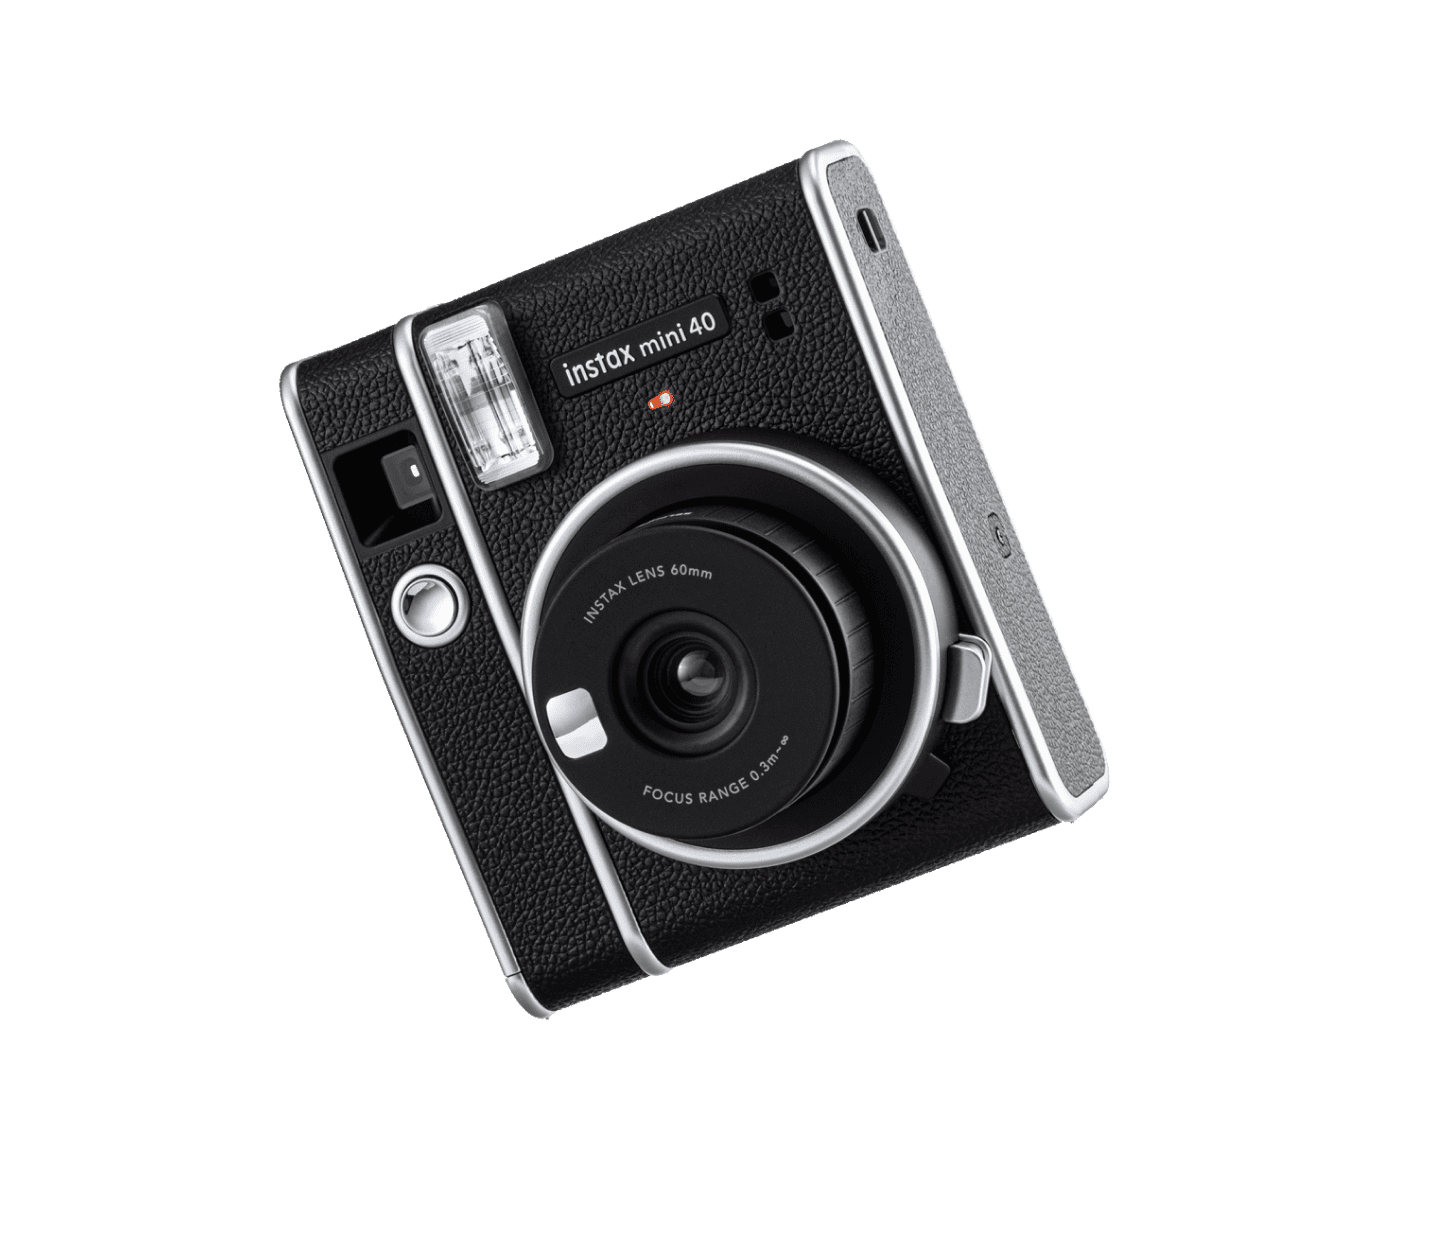 FUJIFILM INSTAX Mini 40 Instant Film Camera Is Stylish and